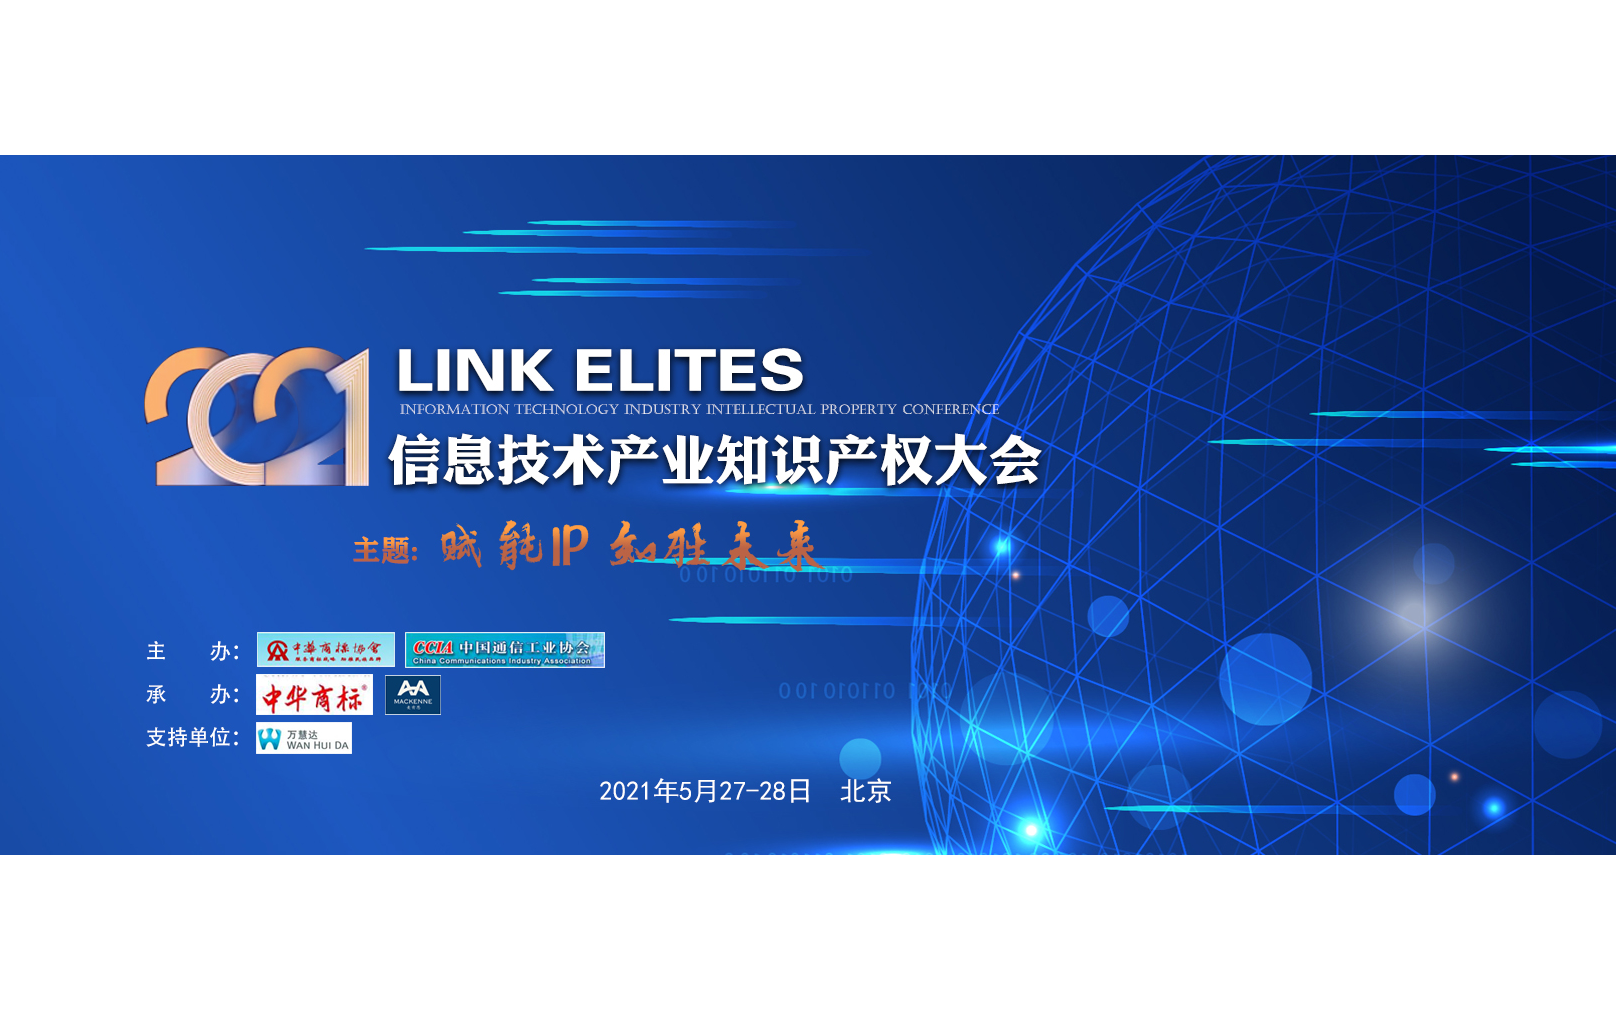 2021LINK ELITES 信息技术产业知识产权大会 